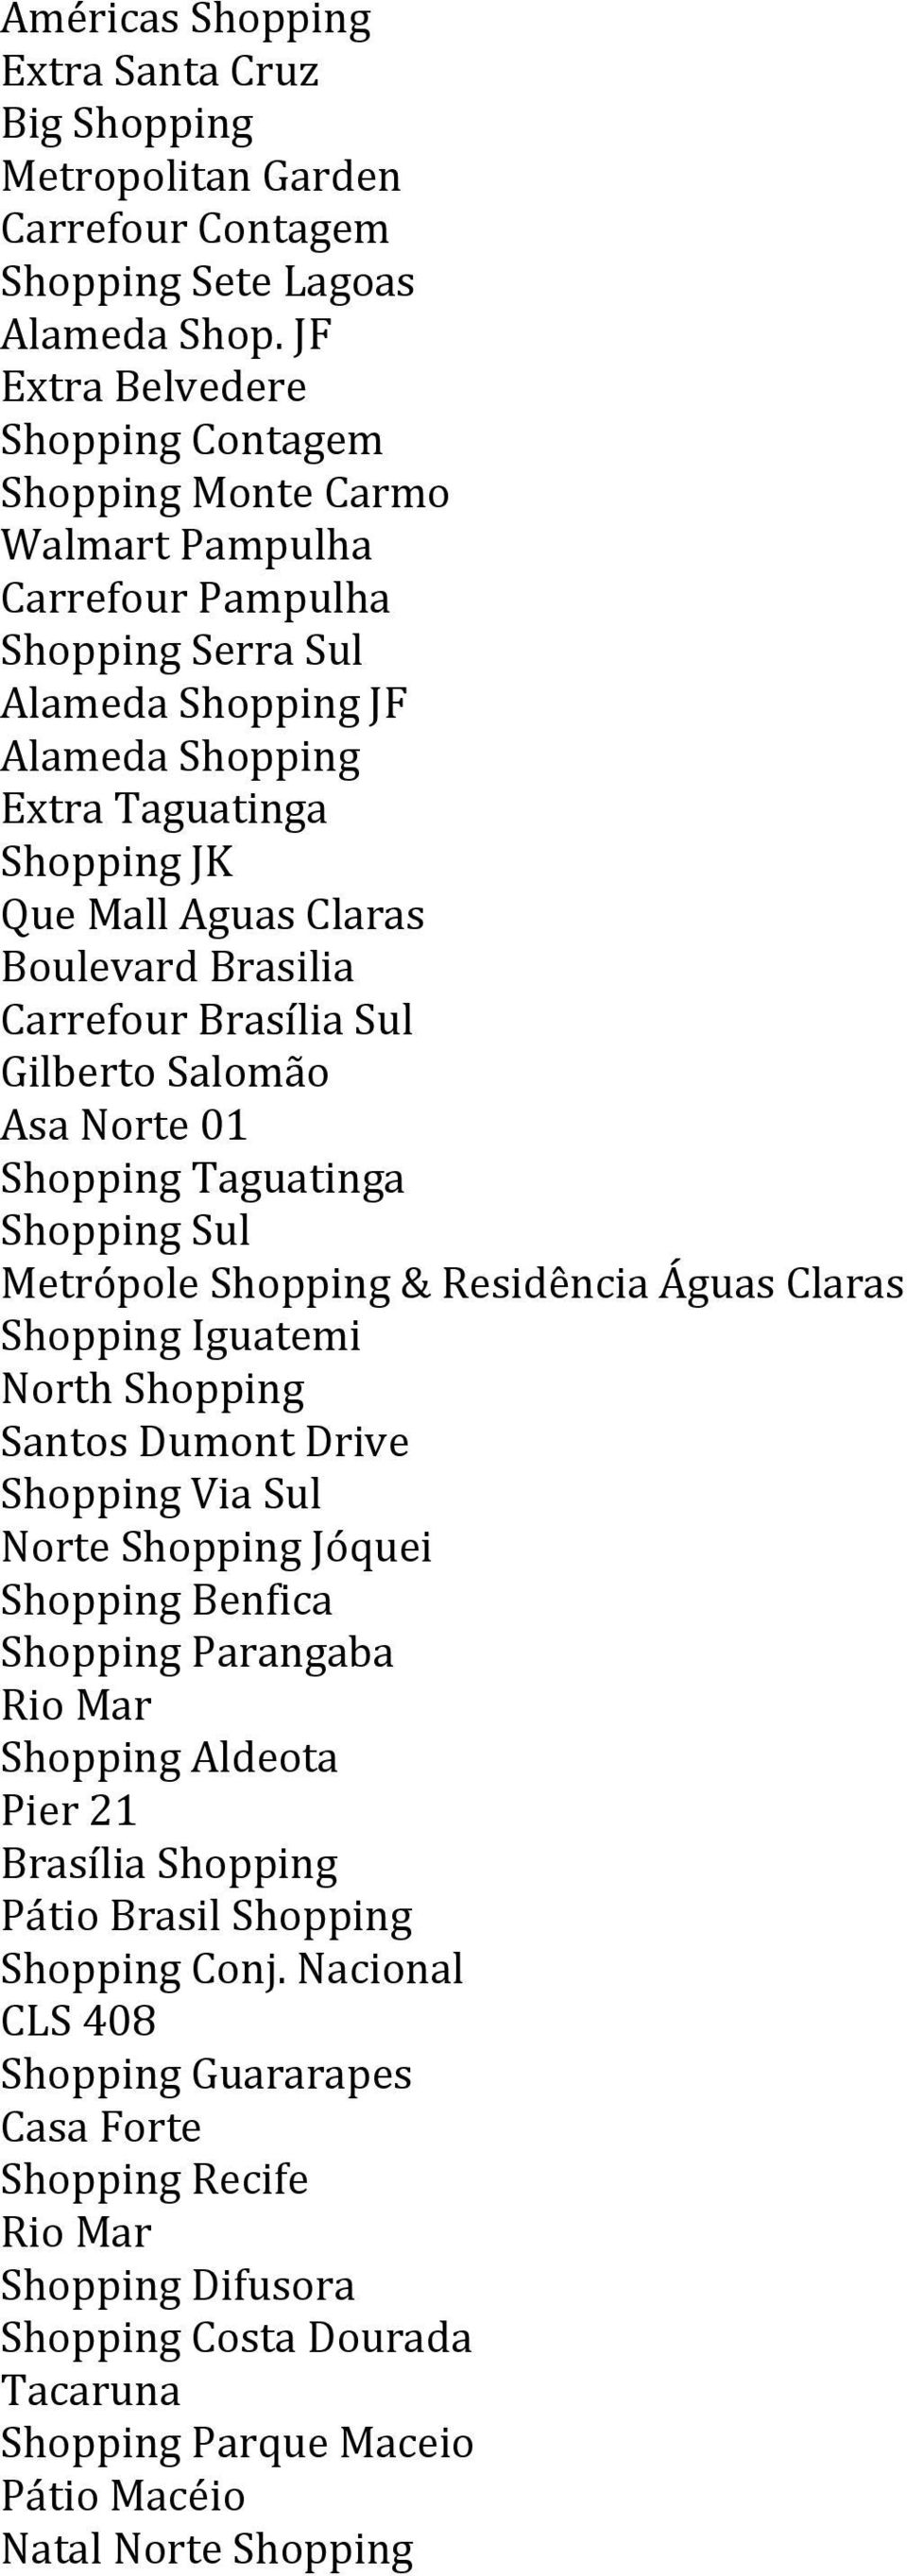 Claras Boulevard Brasilia Carrefour Brasília Sul Gilberto Salomão Asa Norte 01 Shopping Taguatinga Shopping Sul Metrópole Shopping & Residência Águas Claras Shopping Iguatemi North Shopping Santos